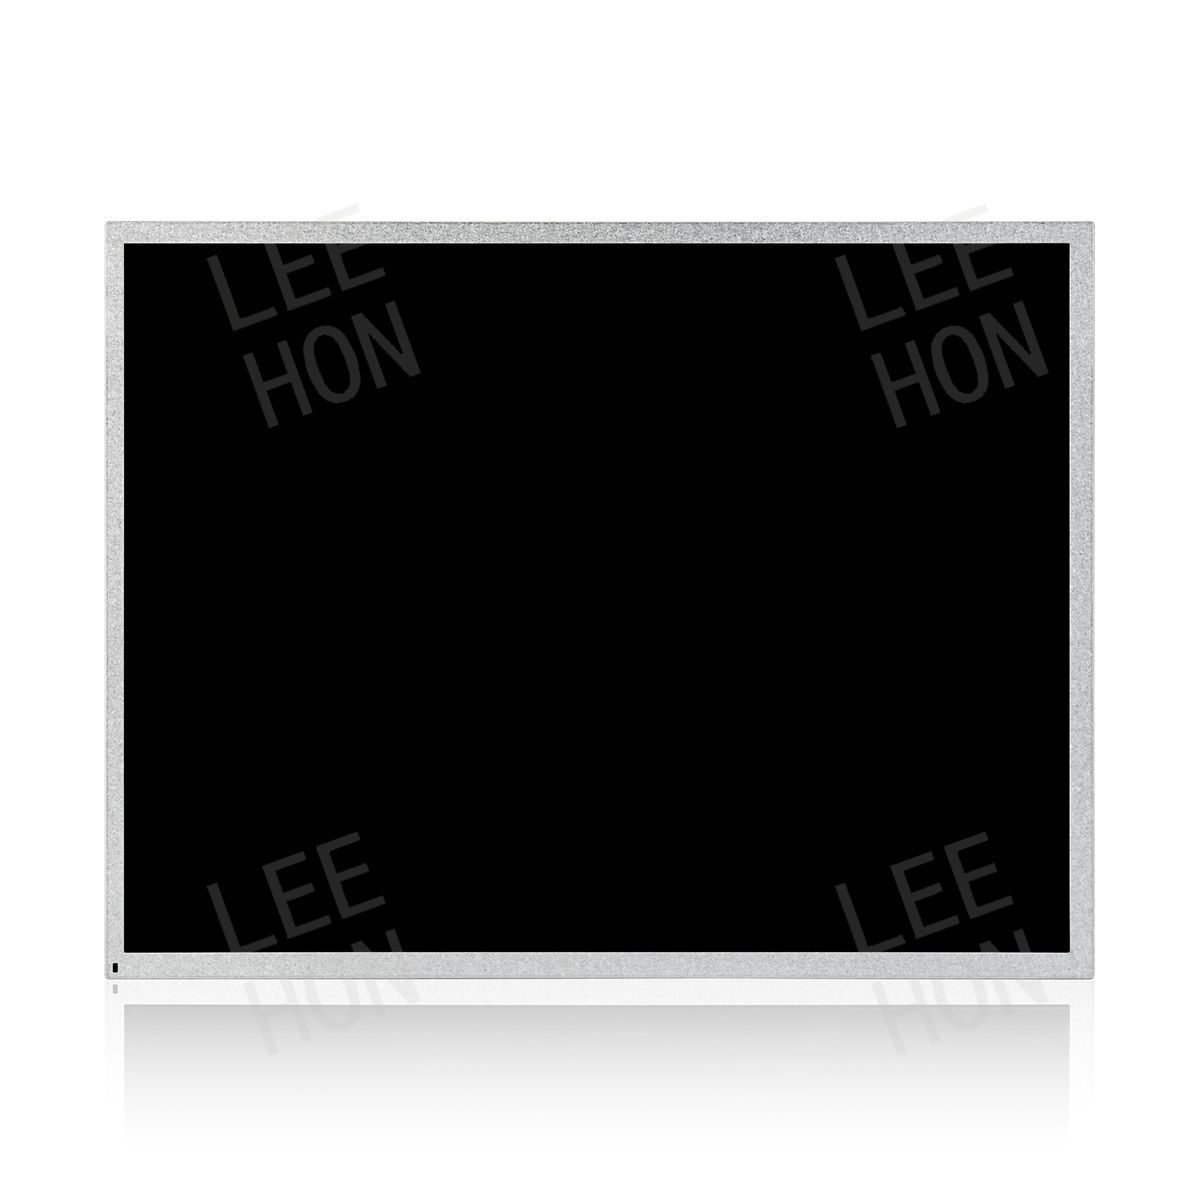 AUO 15 Inch 1024x768 XGA LCD Panel TFT High Brightness Display G150XTN06.A 1800nits and LVDS